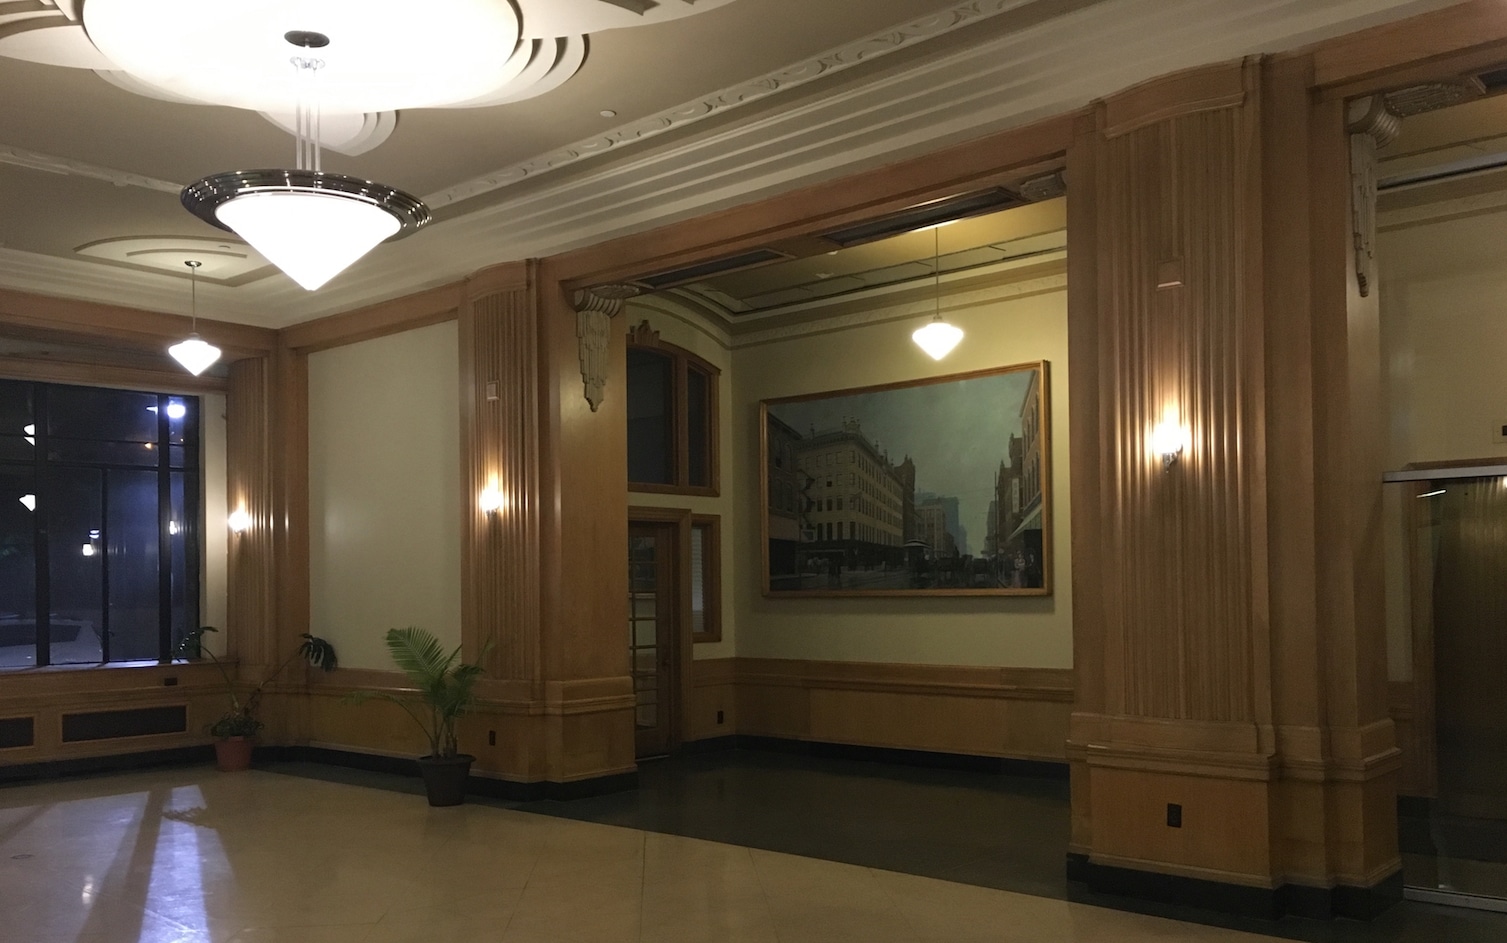 Art Deco lobby of Kirkwood Hotel with Doug Sheldon painting in background